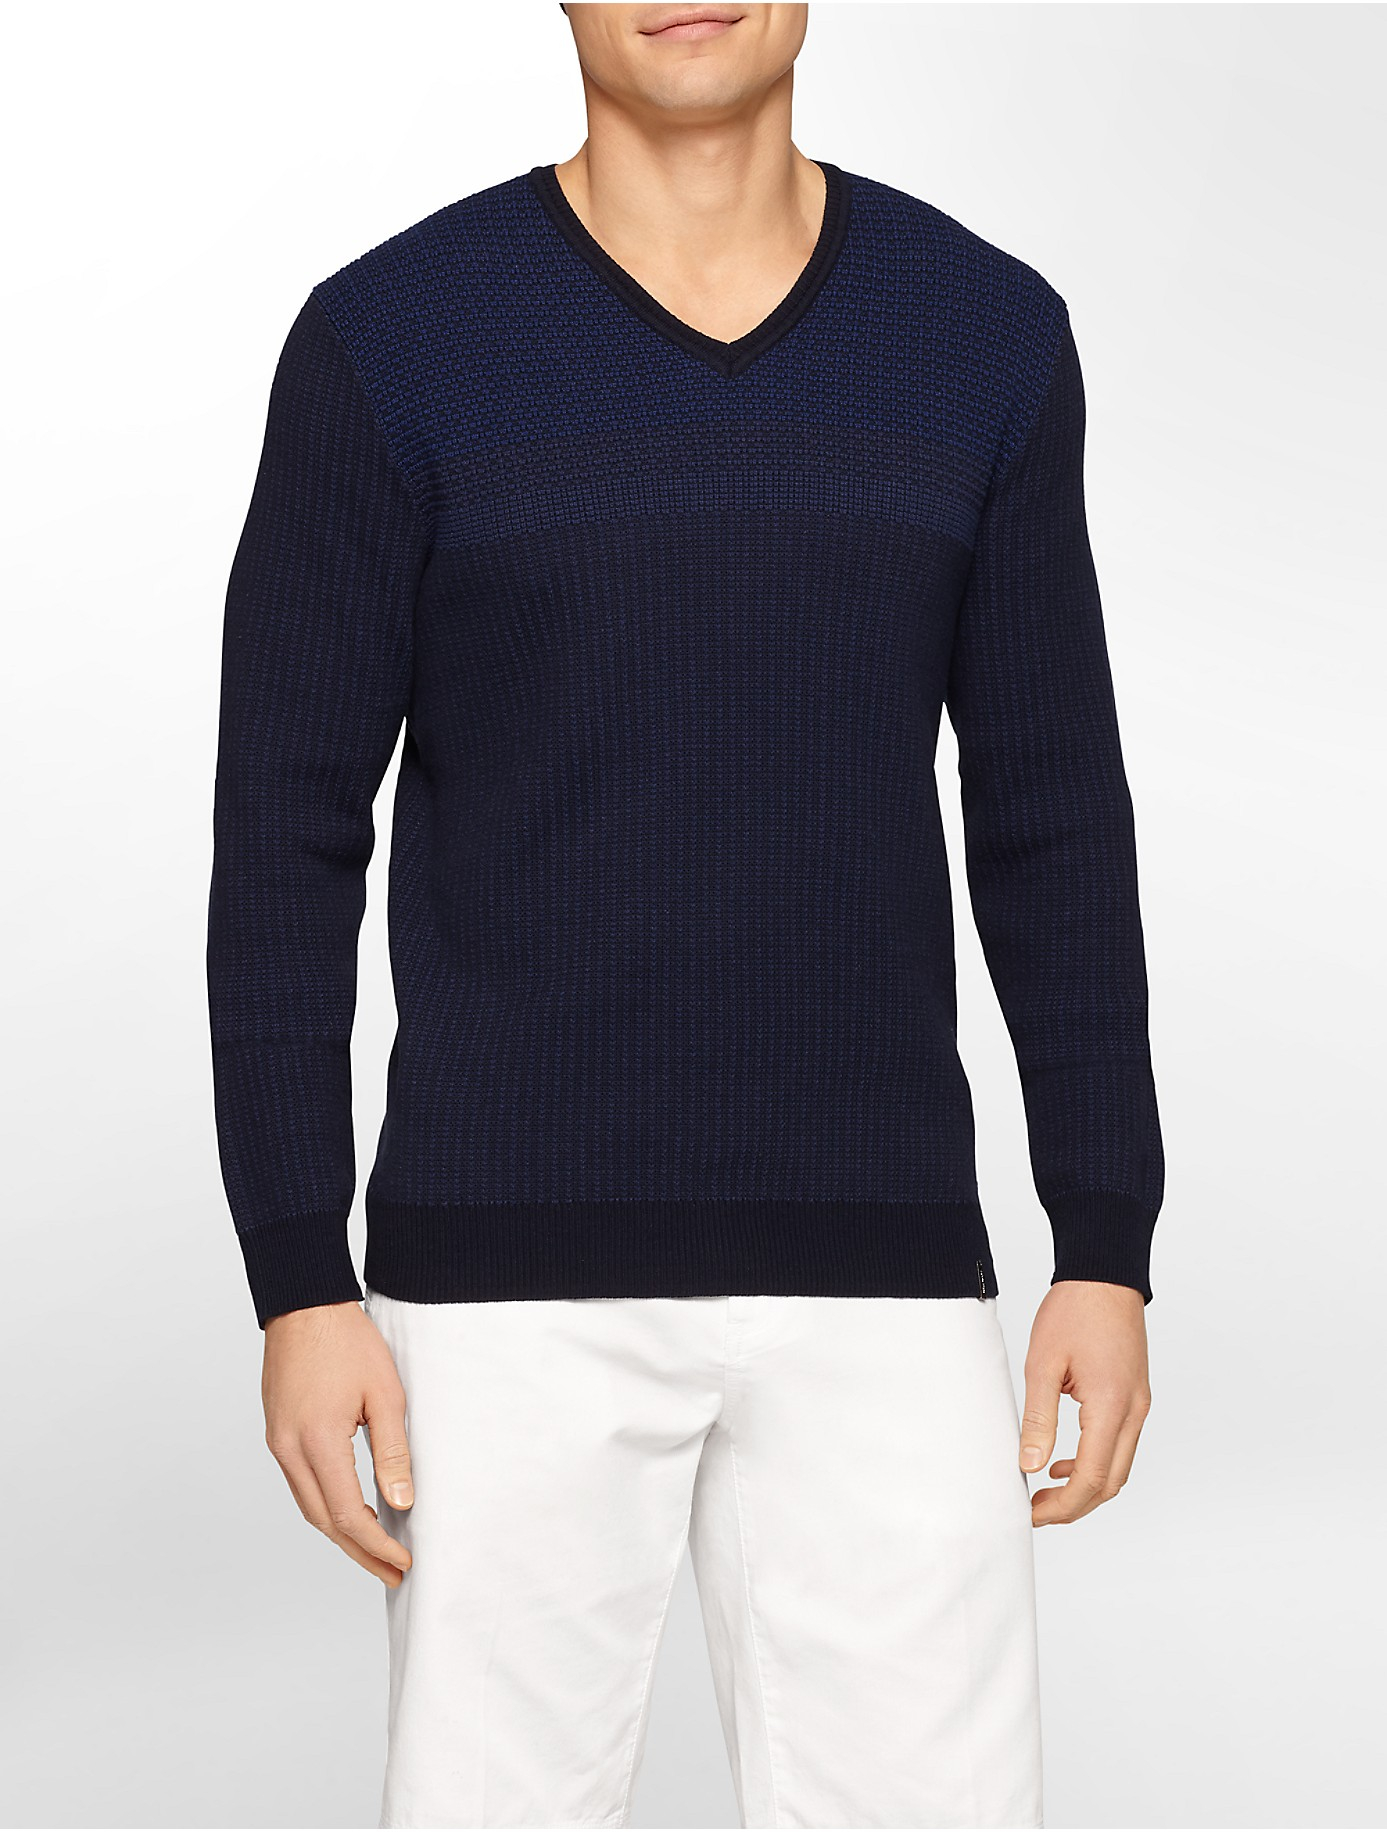 Calvin klein White Label Striped Cotton V-neck Sweater in Blue for Men ...